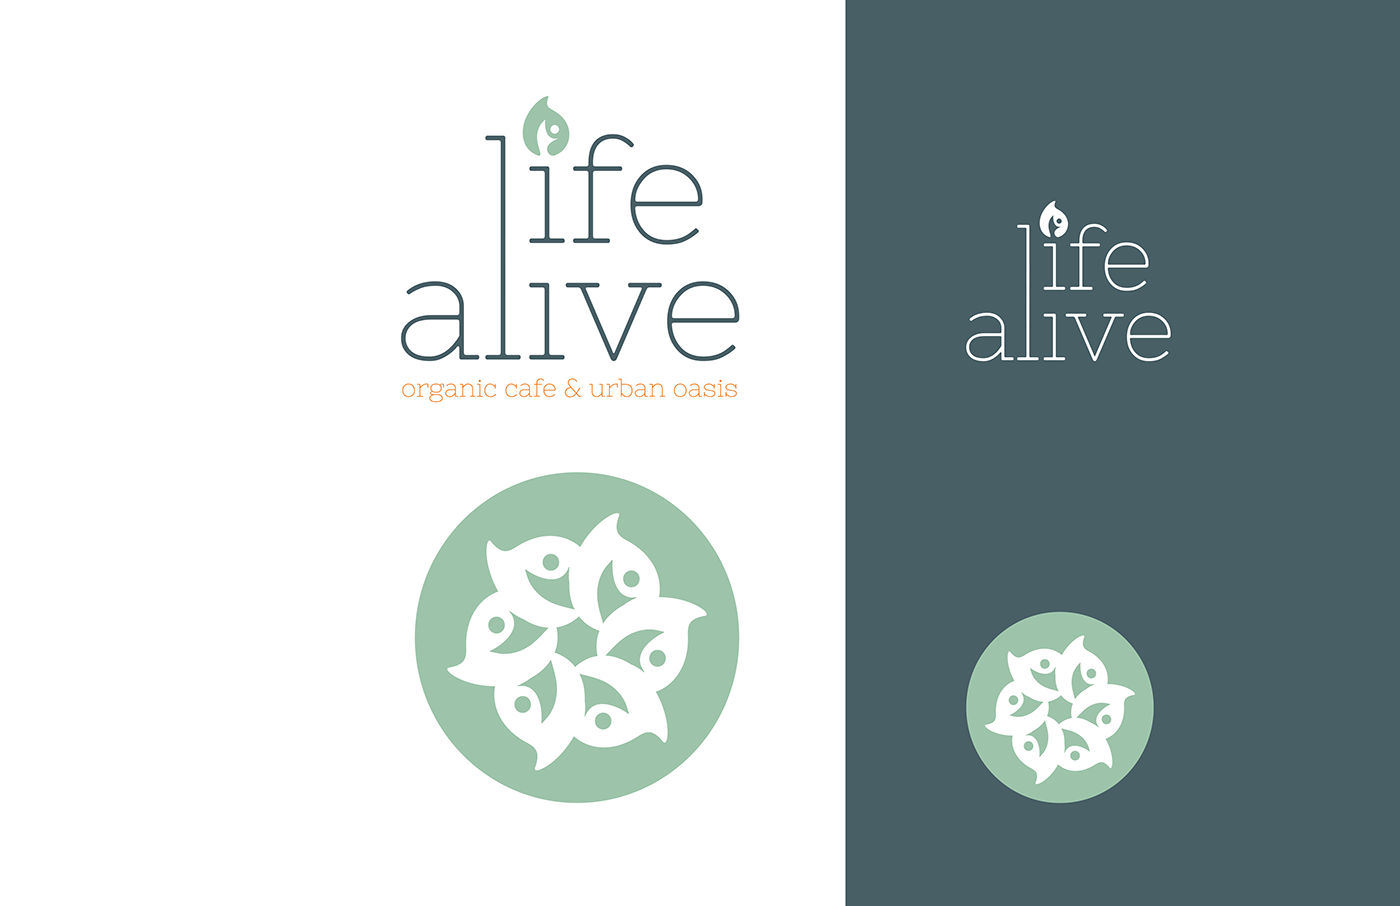 Rebrand life alive vegan graphic design 